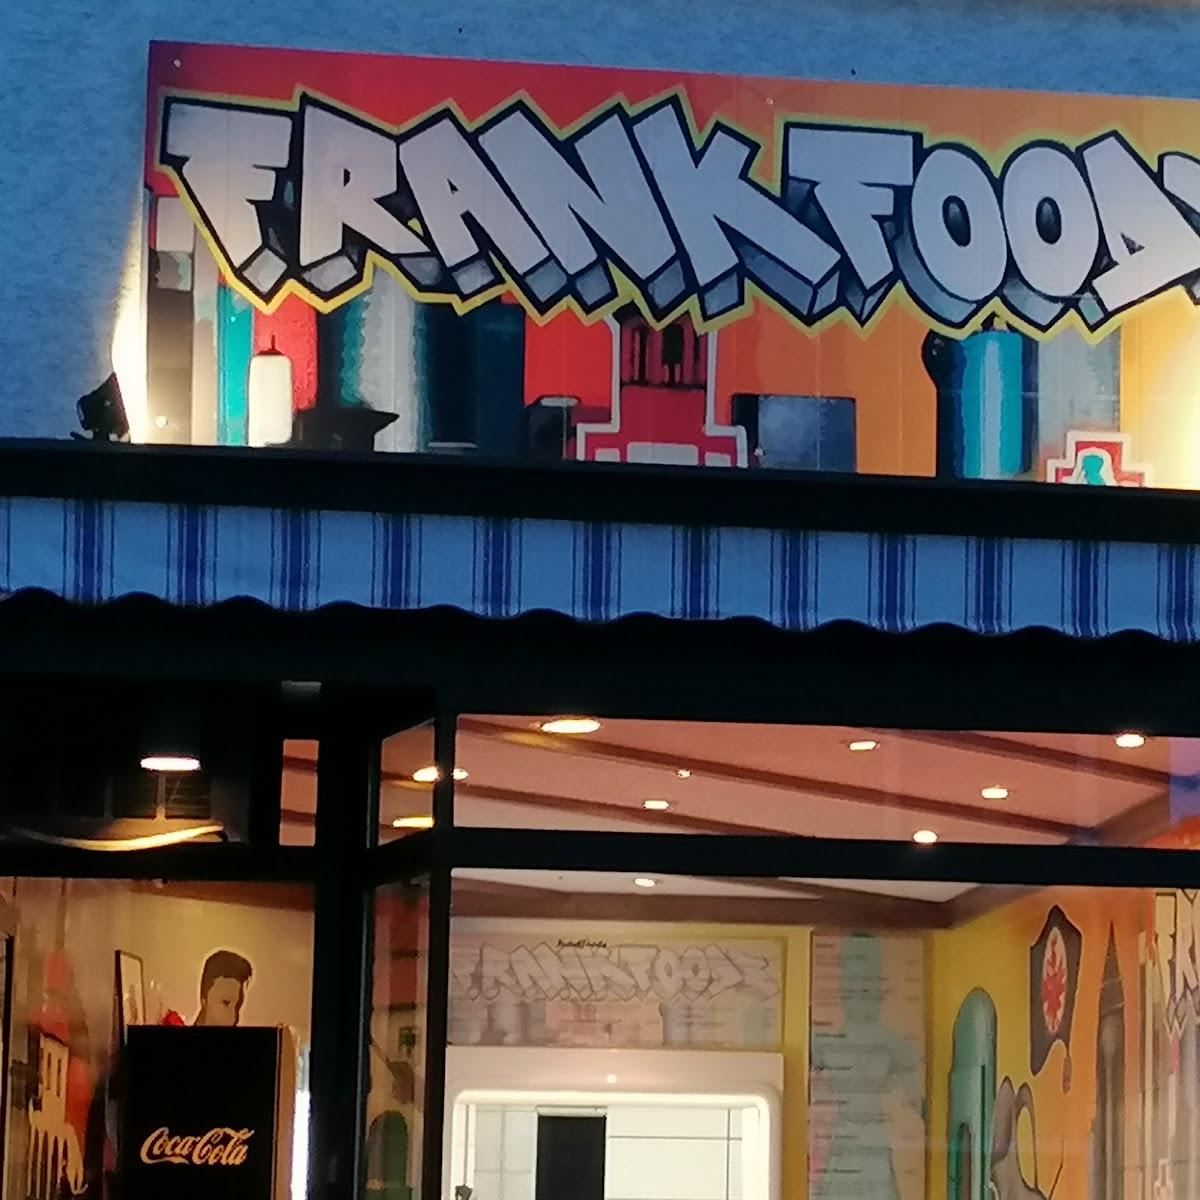 Restaurant "Frankfoods" in Bad Nauheim